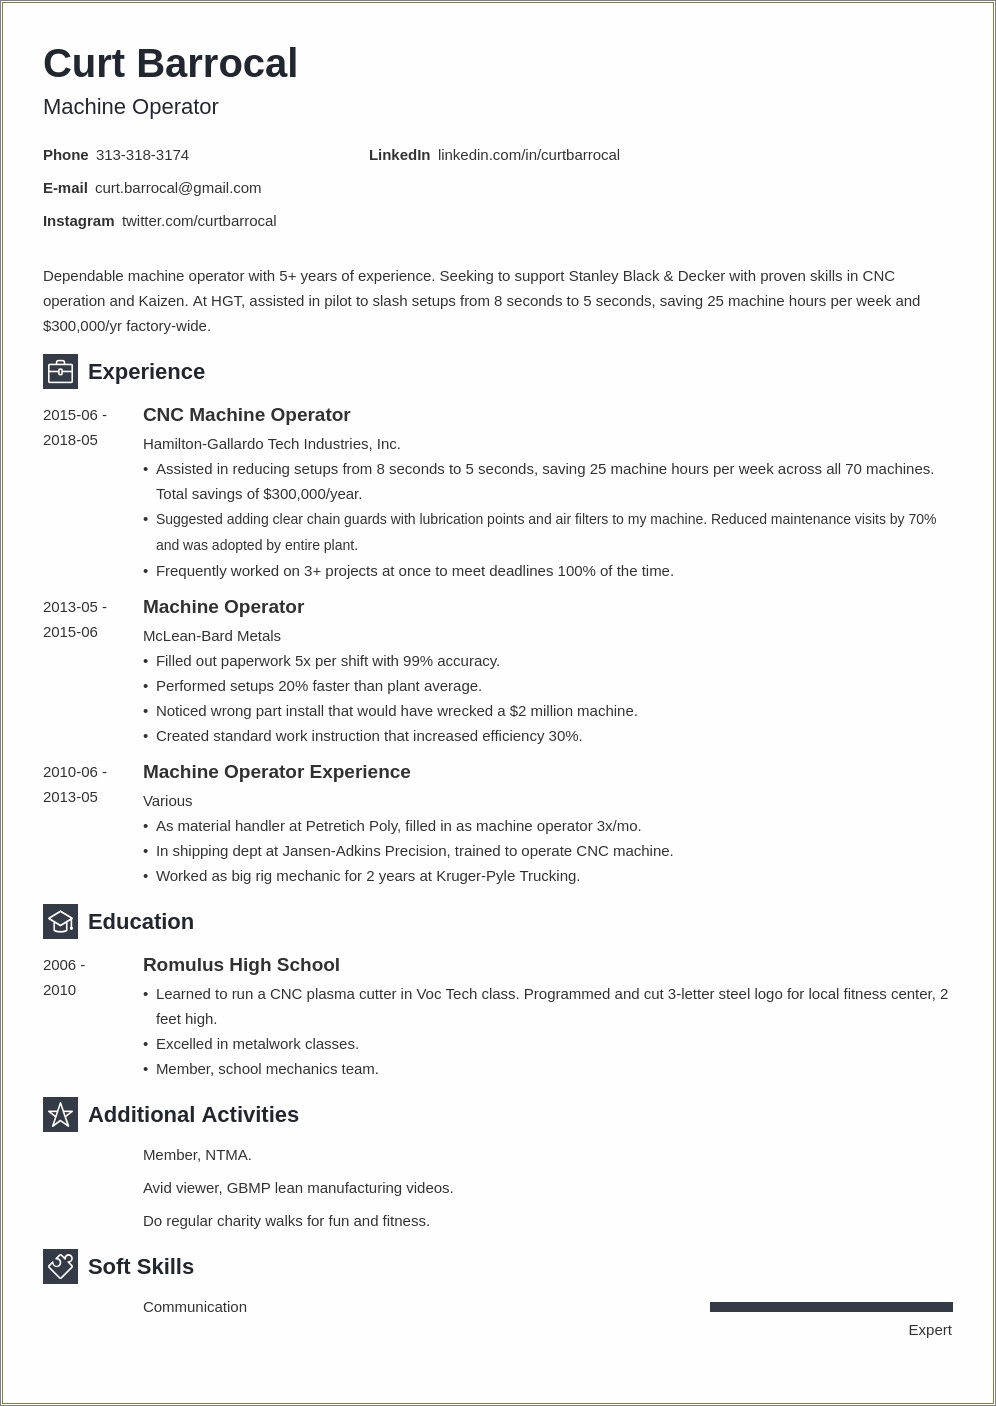 Service Industry Operator Job Description Resume